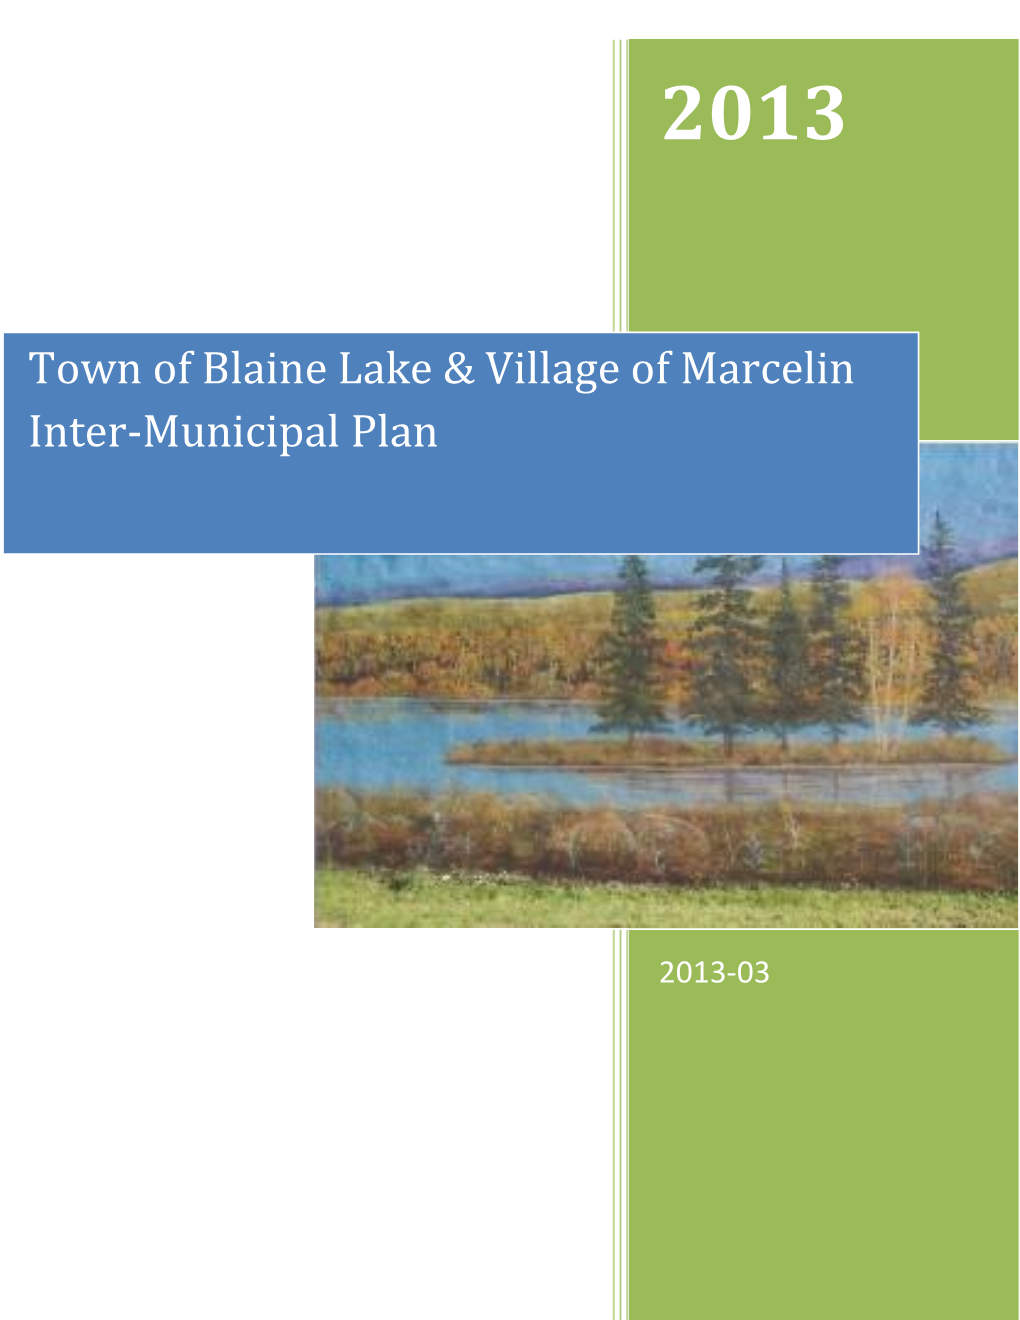 Town of Blaine Lake & Village of Marcelin Inter-Municipal Plan